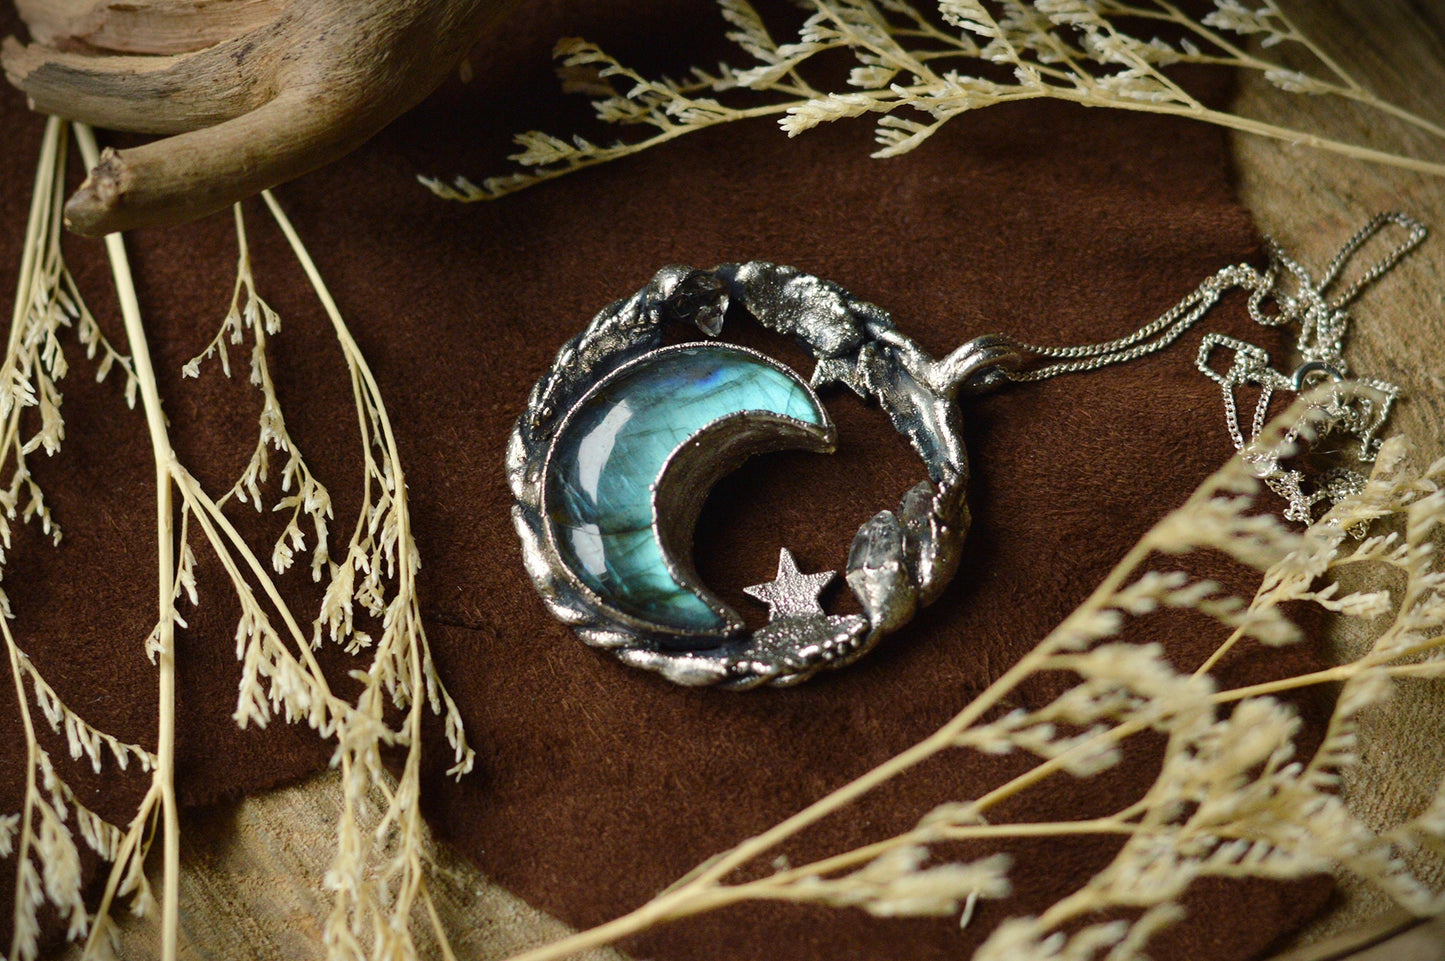 Harvest.3 collection - 'Sunset' labradorite pendant with botanical elements, enchanted woodland necklace